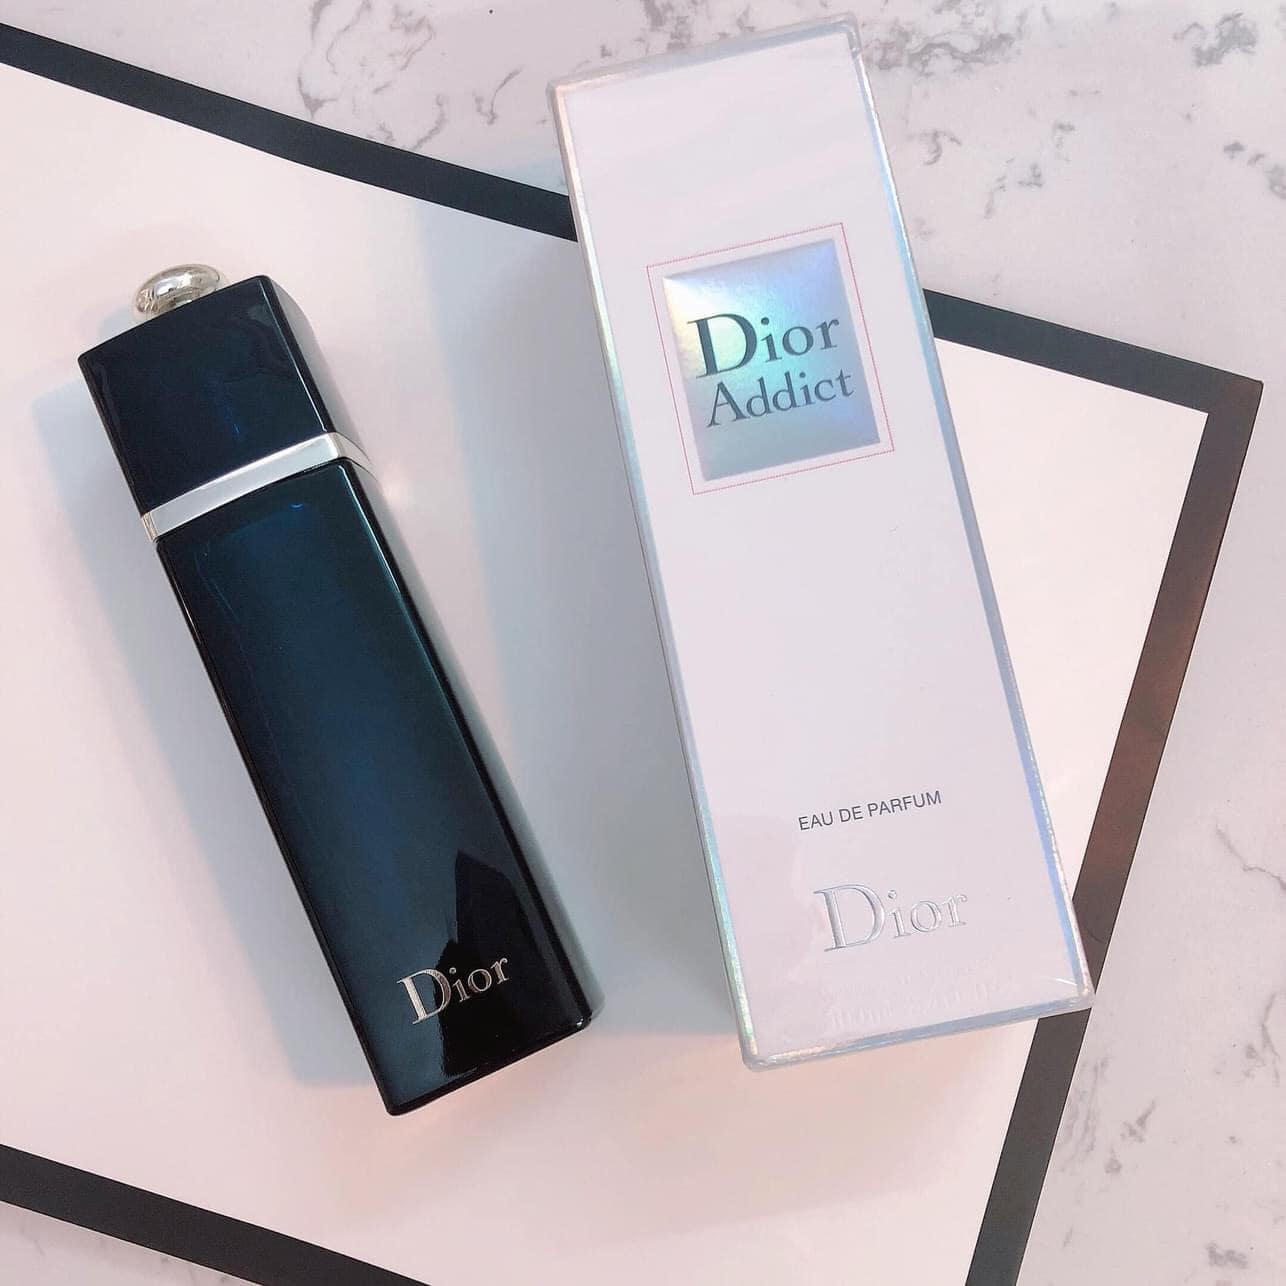 Dior Addict Eau De Parfum 2 - Nuochoarosa.com - Nước hoa cao cấp, chính hãng giá tốt, mẫu mới